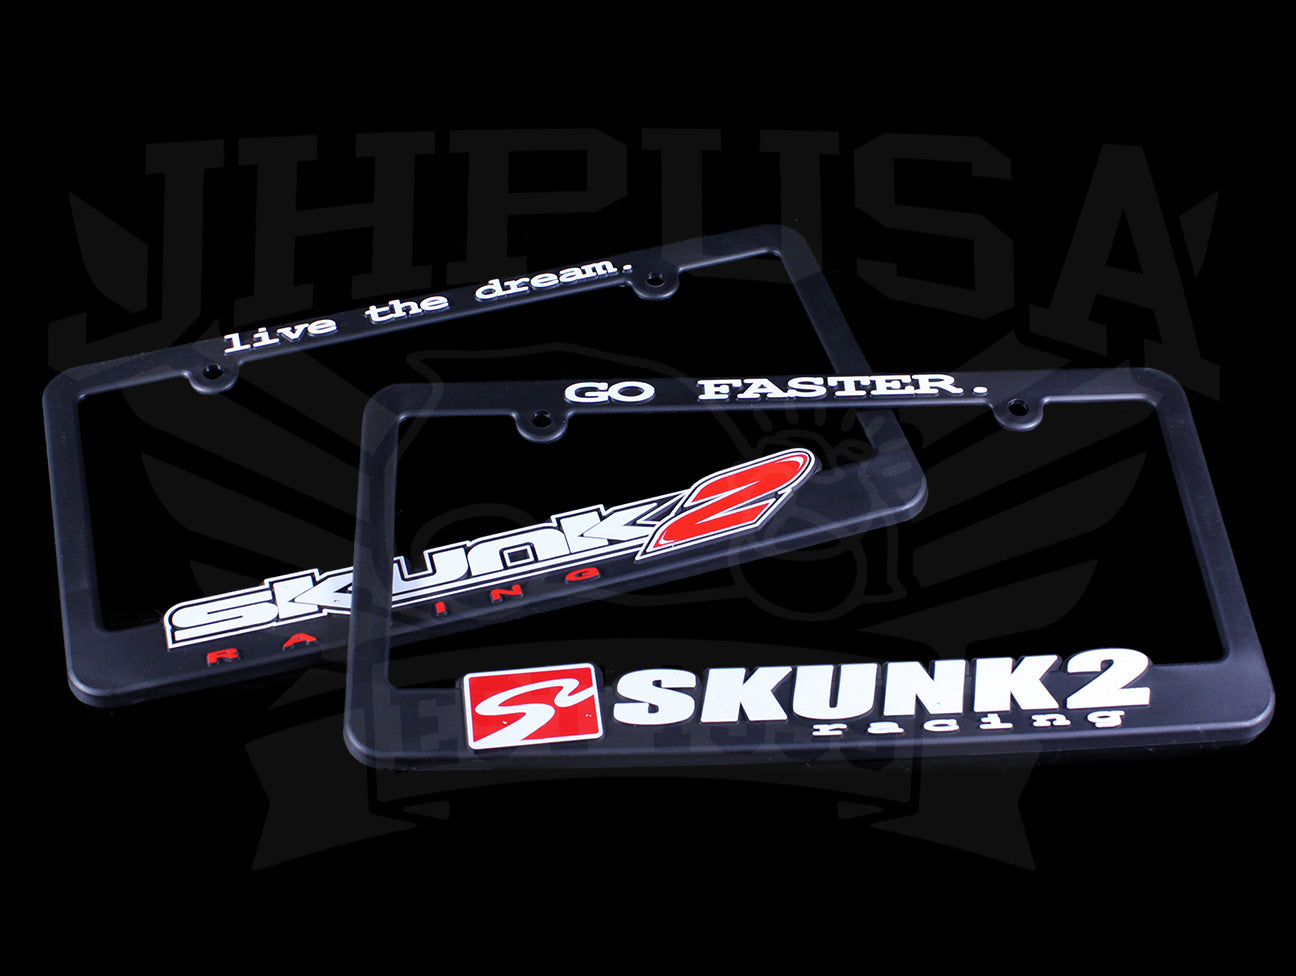 Skunk2 'Live The Dream' License Plate Frame